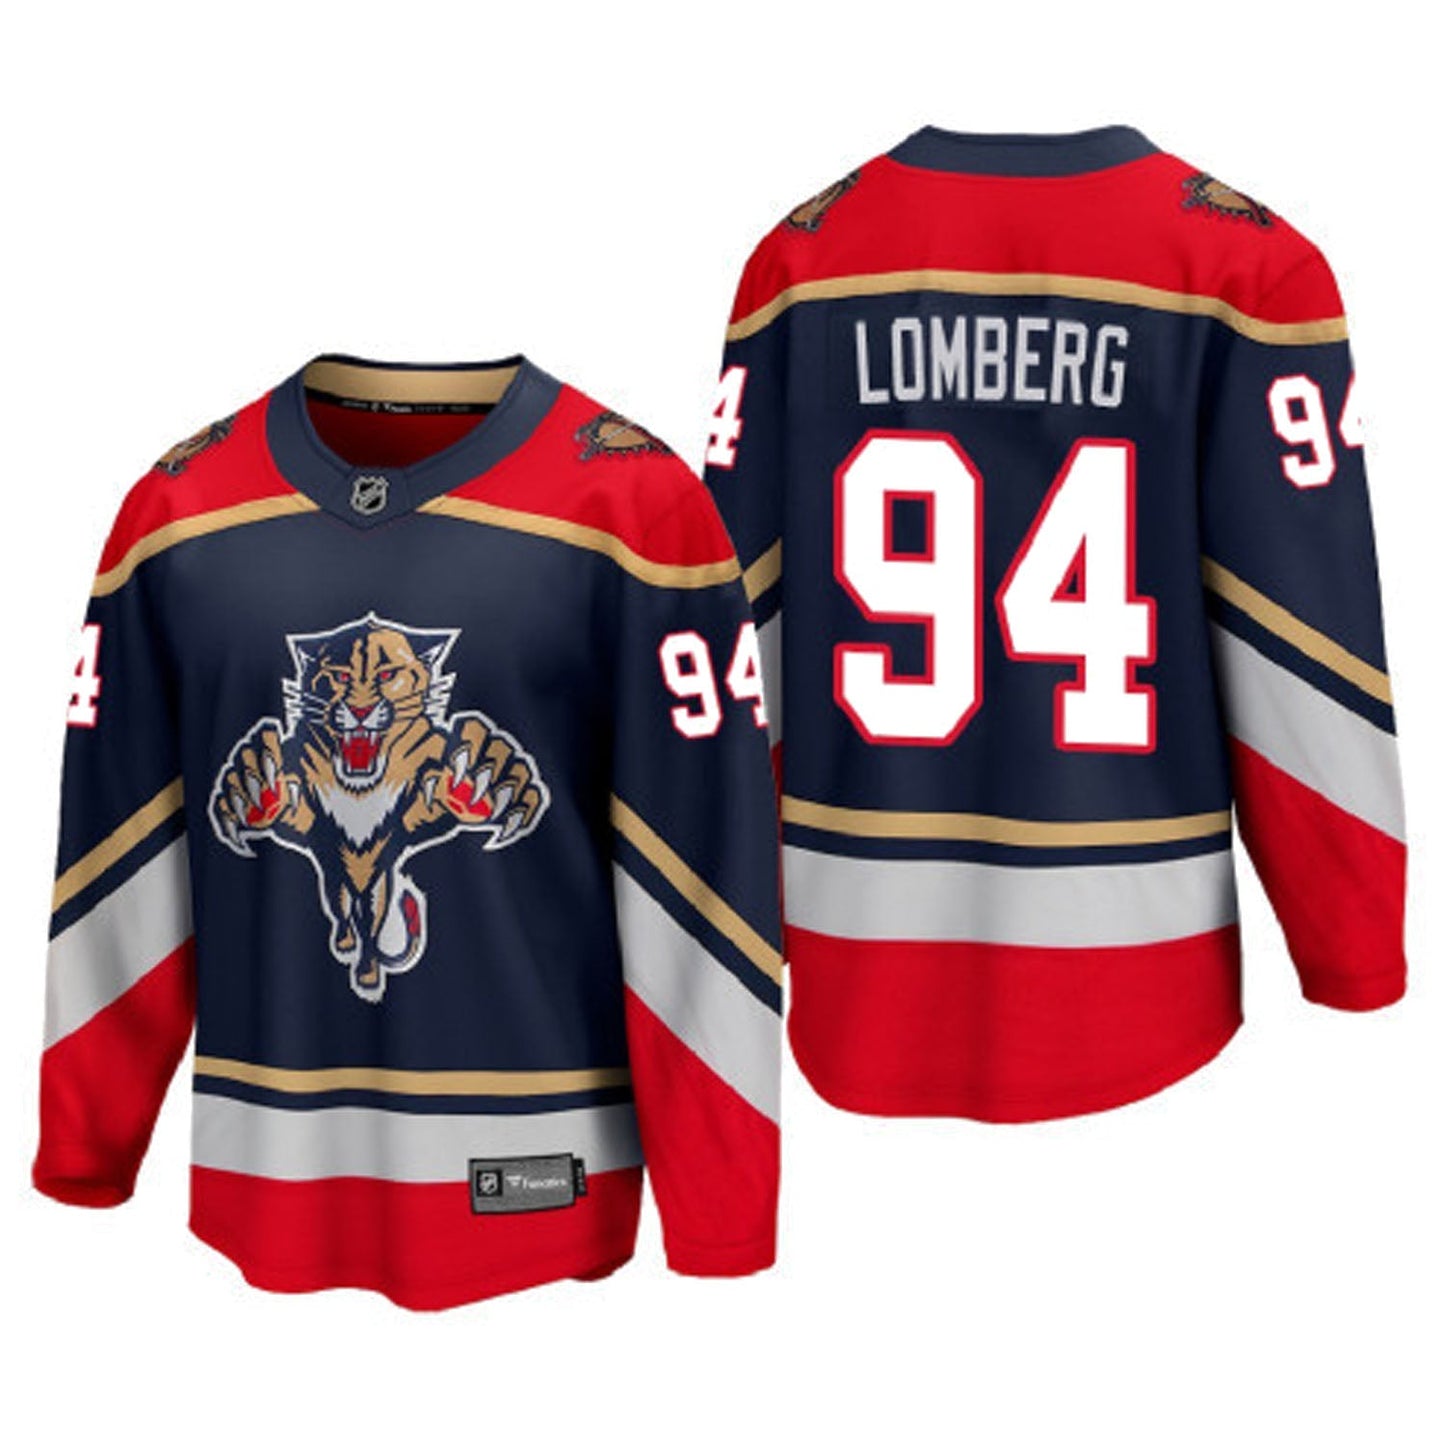 NHL Ryan Lomberg Florida Panthers 94 Jersey